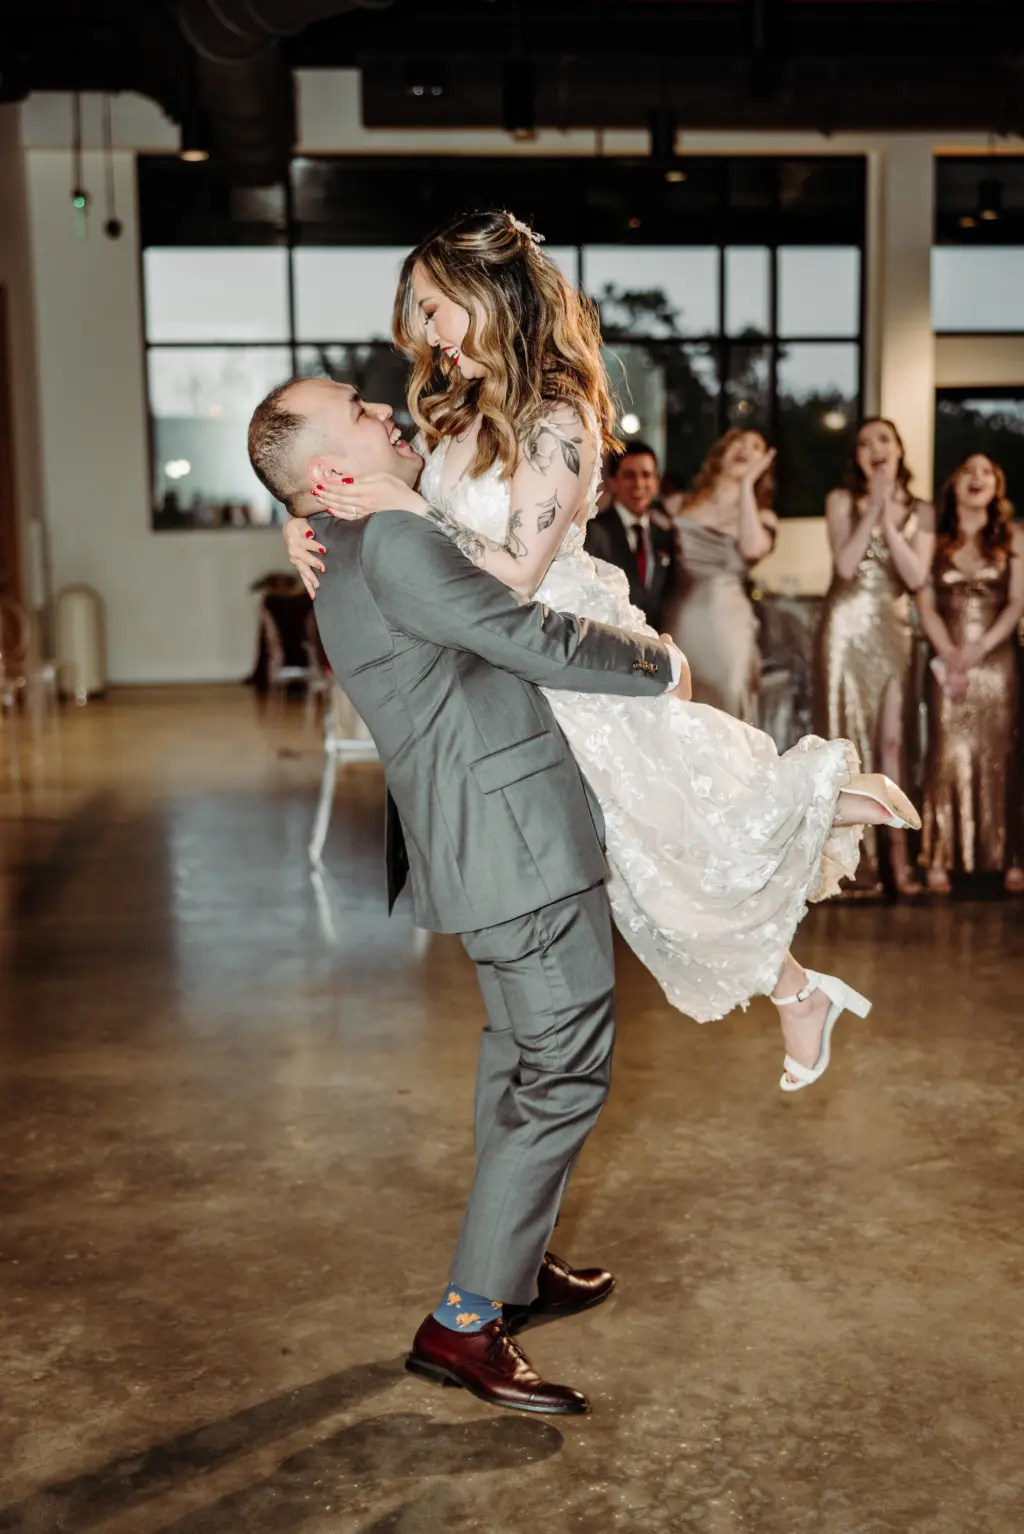 Bride and Groom First Dance Wedding Portrait | Tampa Bay DJ Grant Hemond and Associates